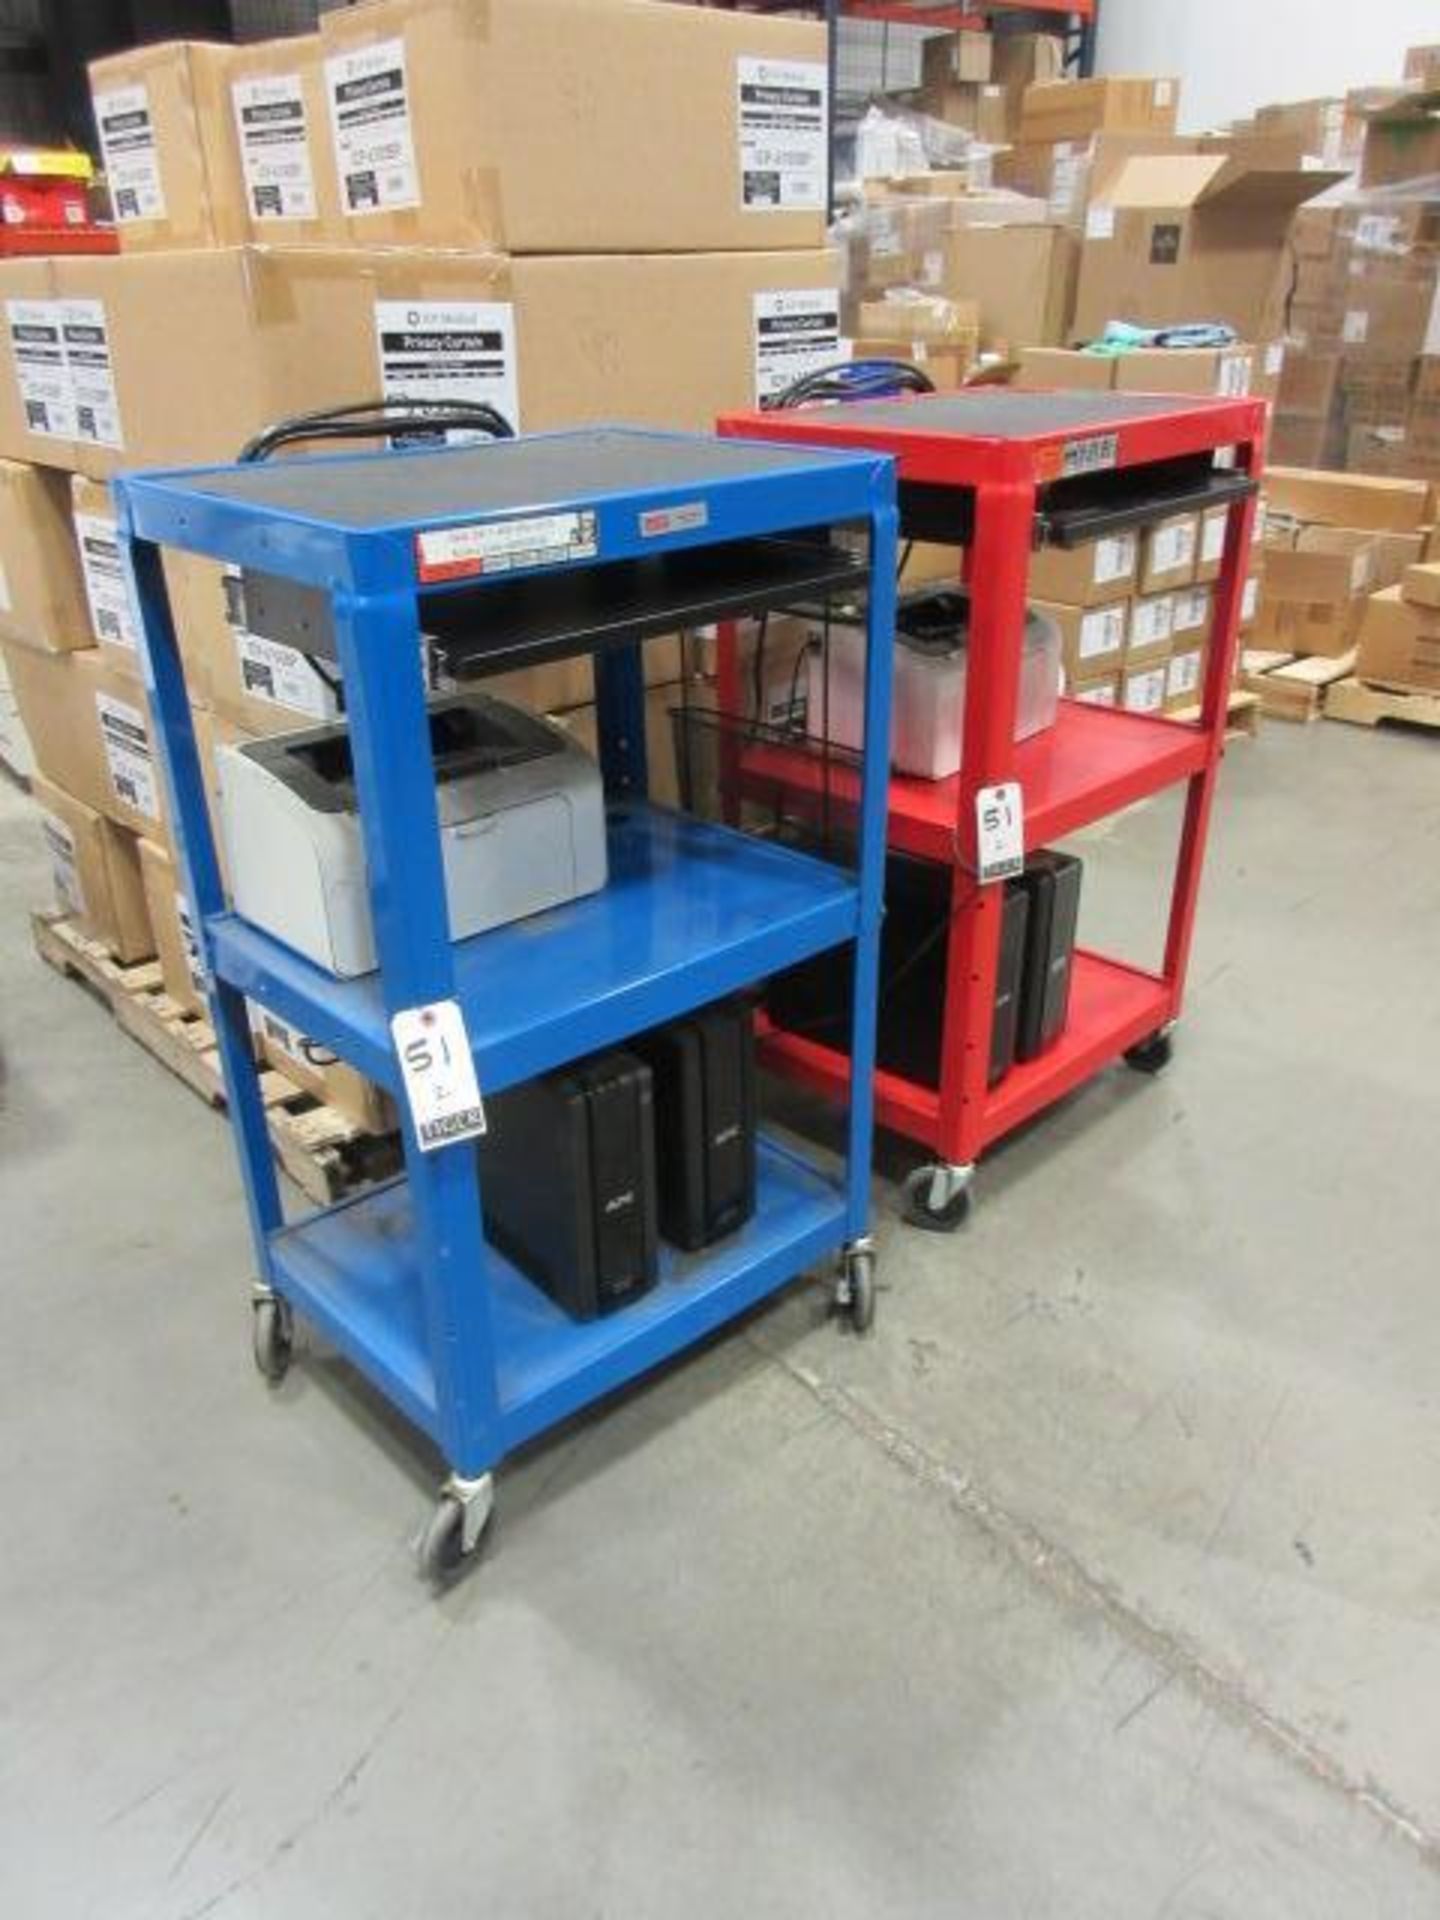 Uline Warehouse Computer Carts - Image 2 of 4